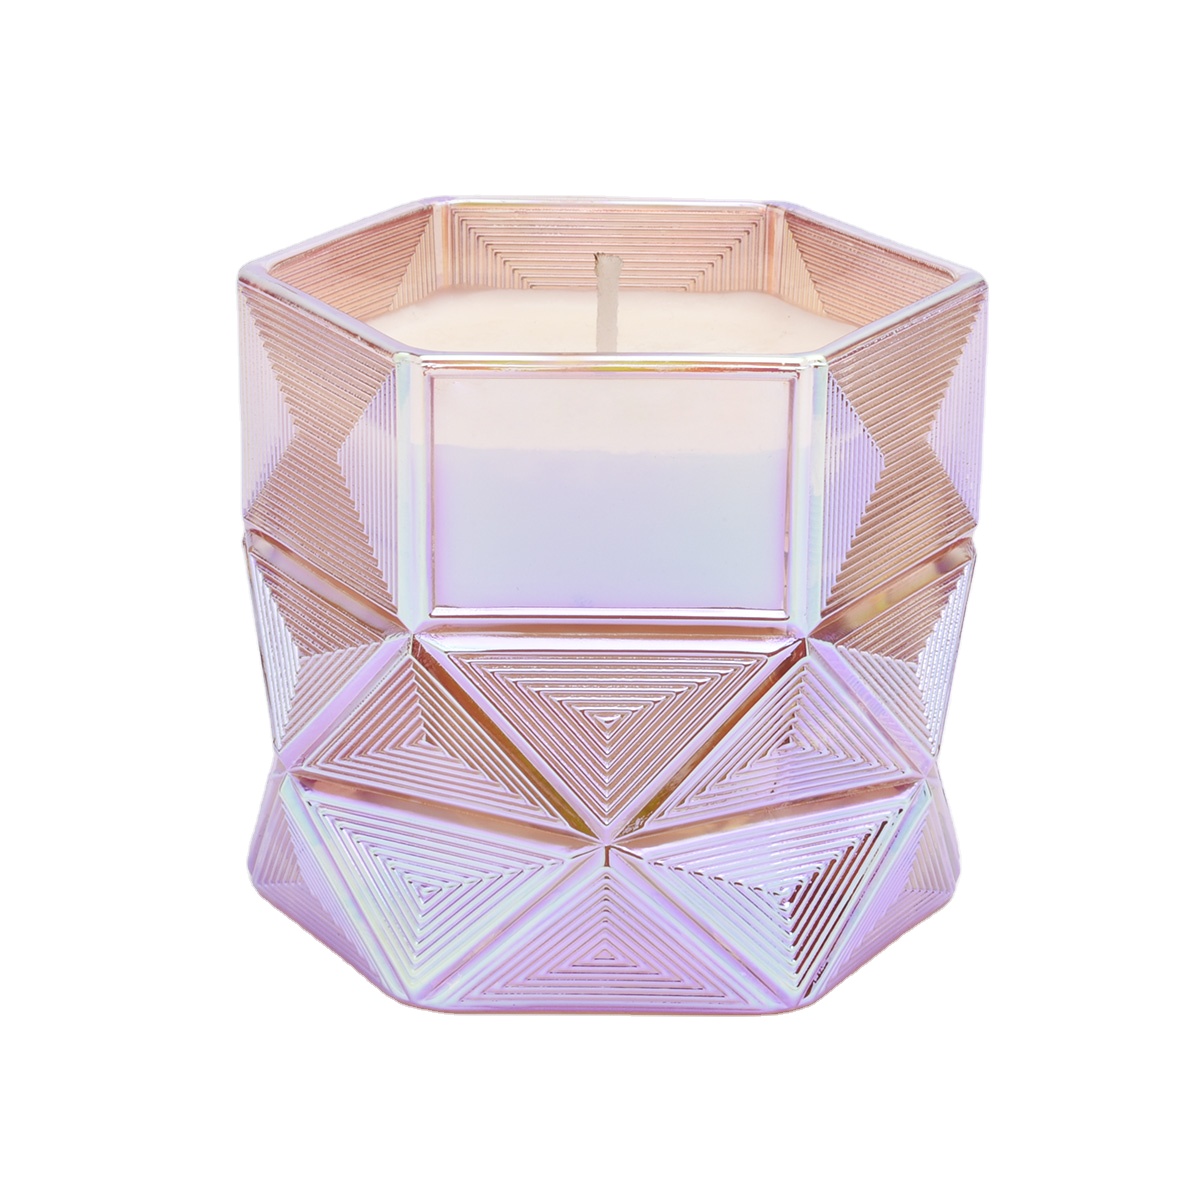 Sunny wedding decoration pink Hexagon luxury glass candle holders